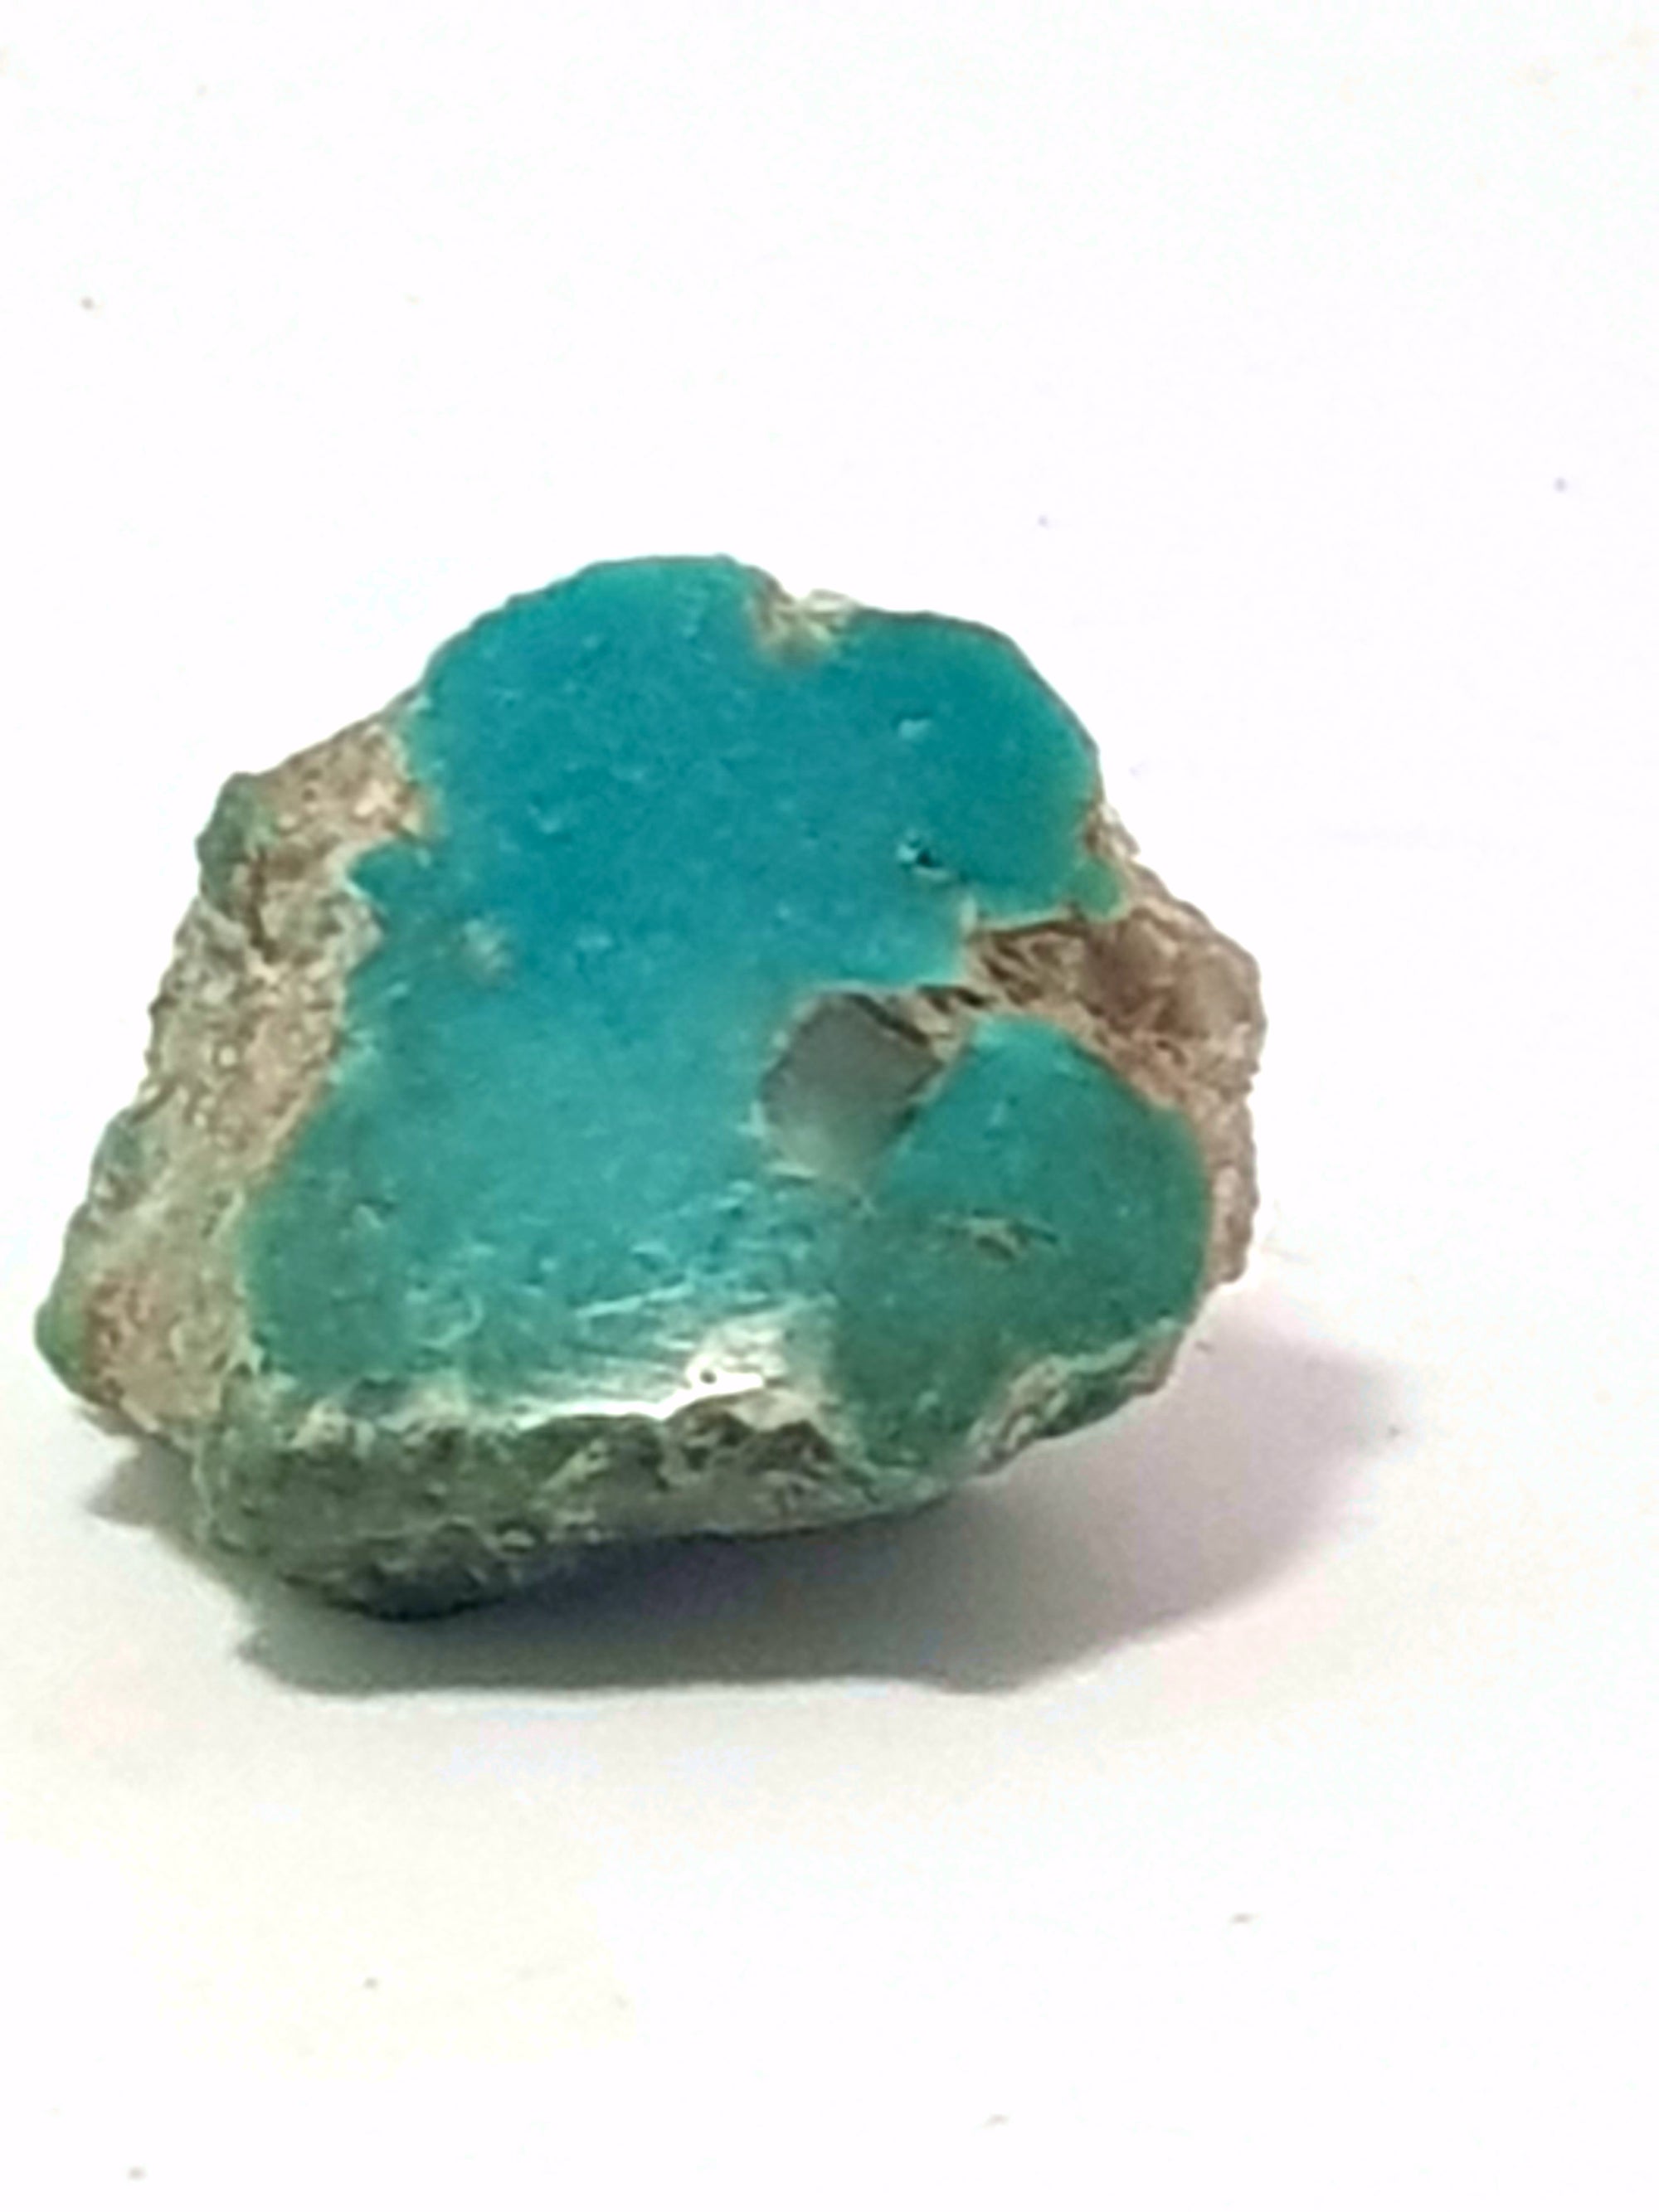 semi polished sample of kingman turquoise. This sample has a fully polished face. The sample is blue green.